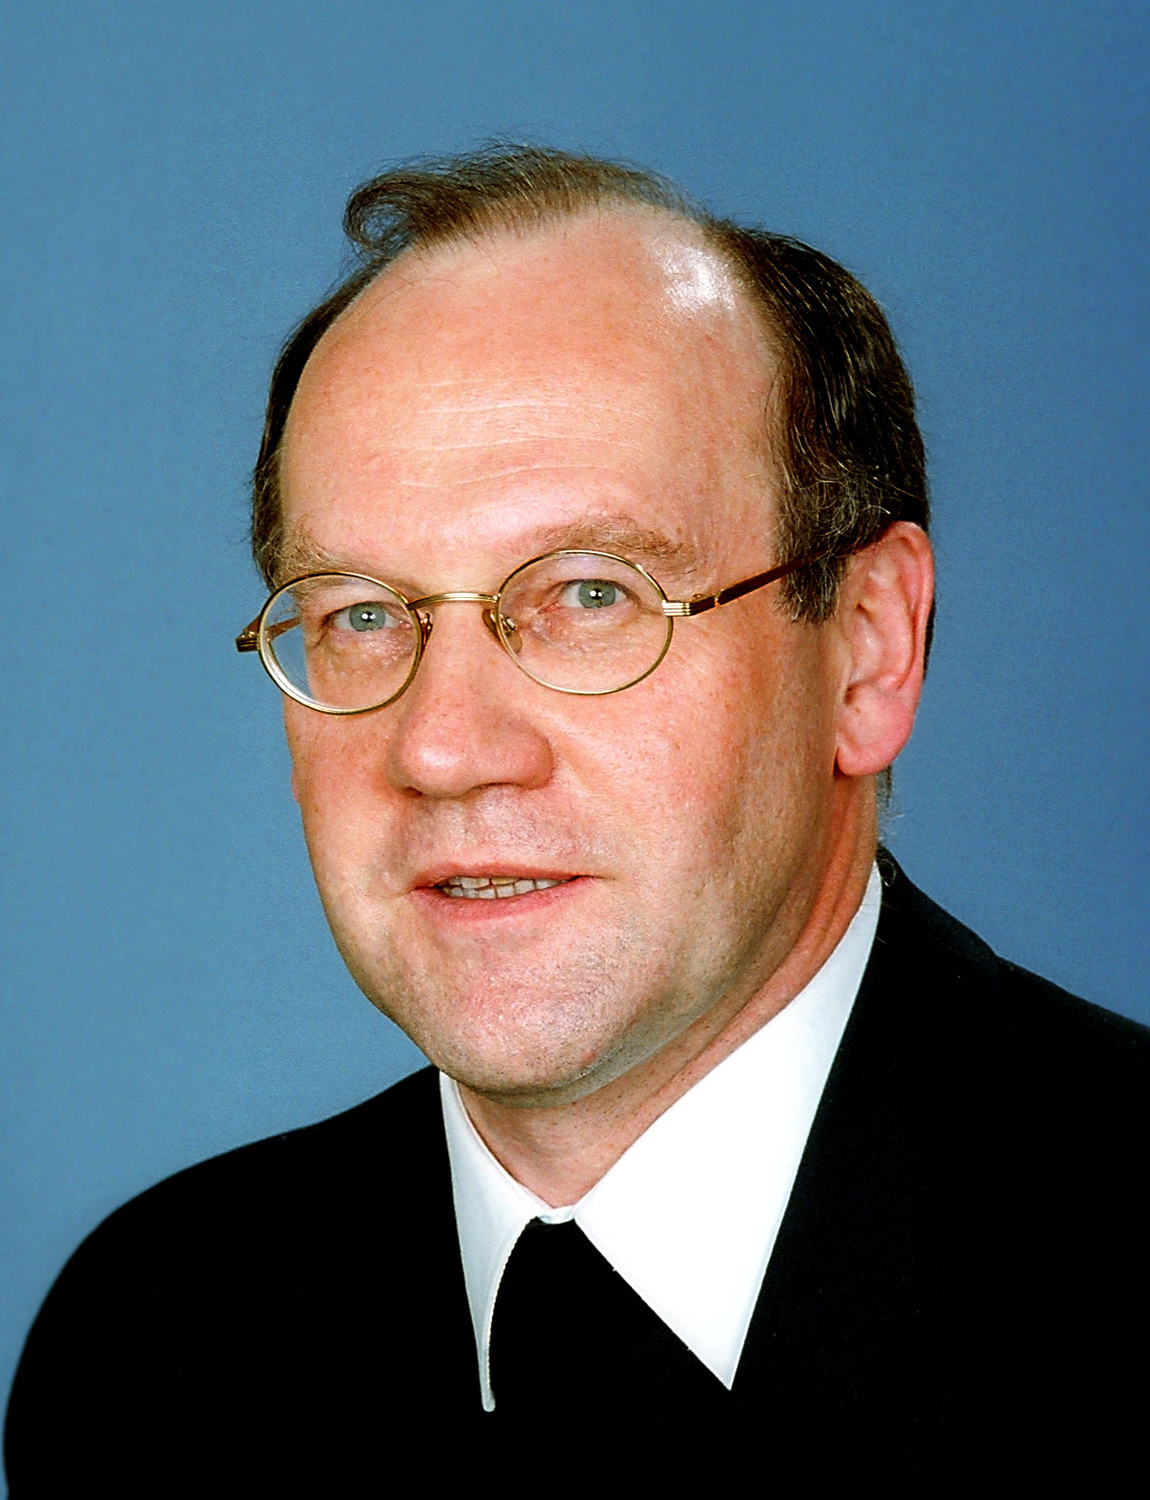 Alois Schwarz